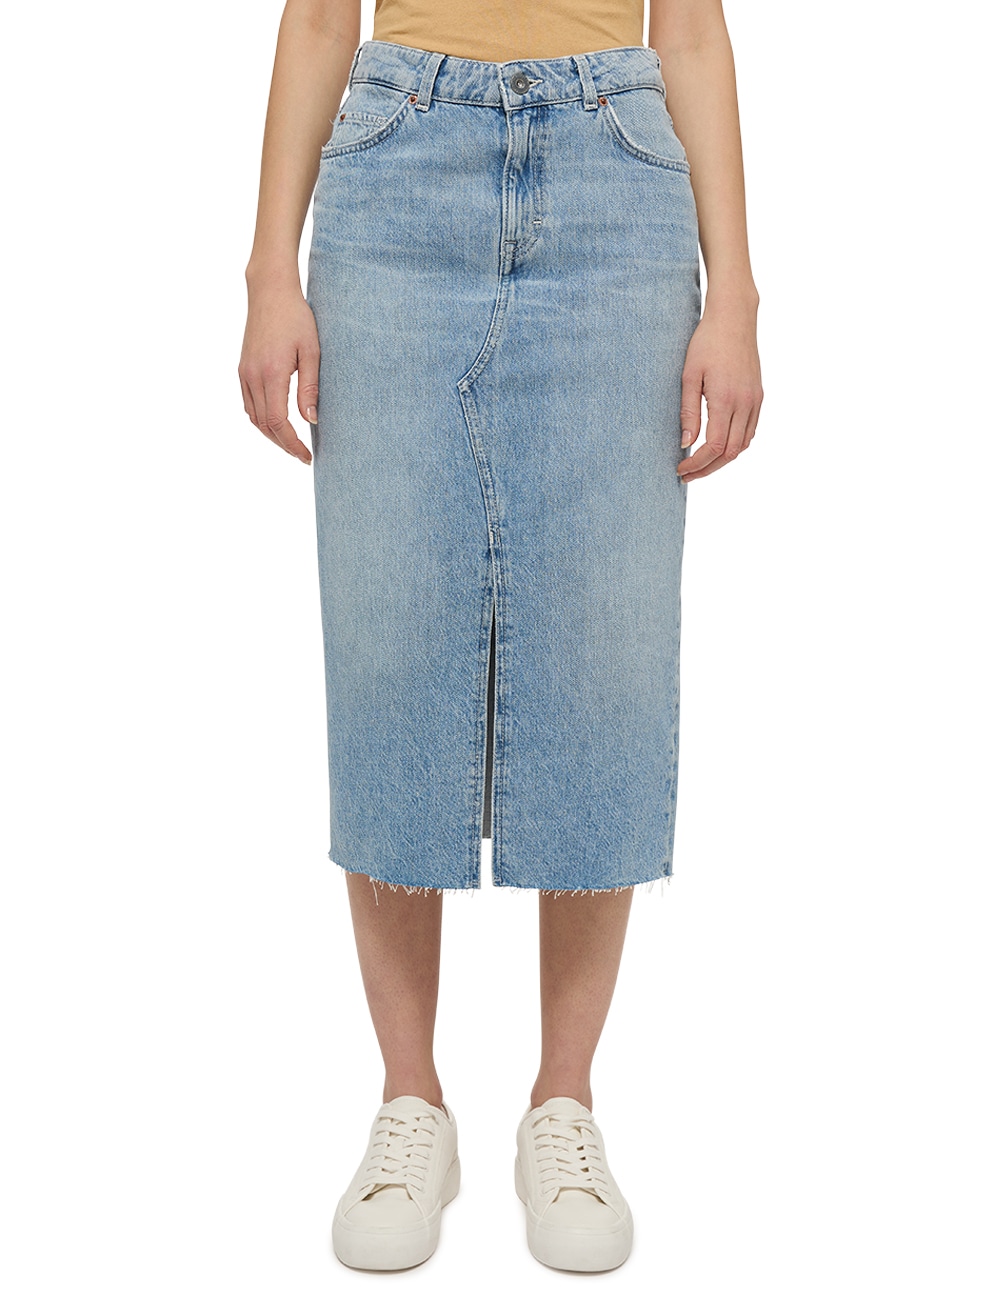 MUSTANG Jeansrock »Style Pencil Skirt« bestellen im OTTO Online Shop